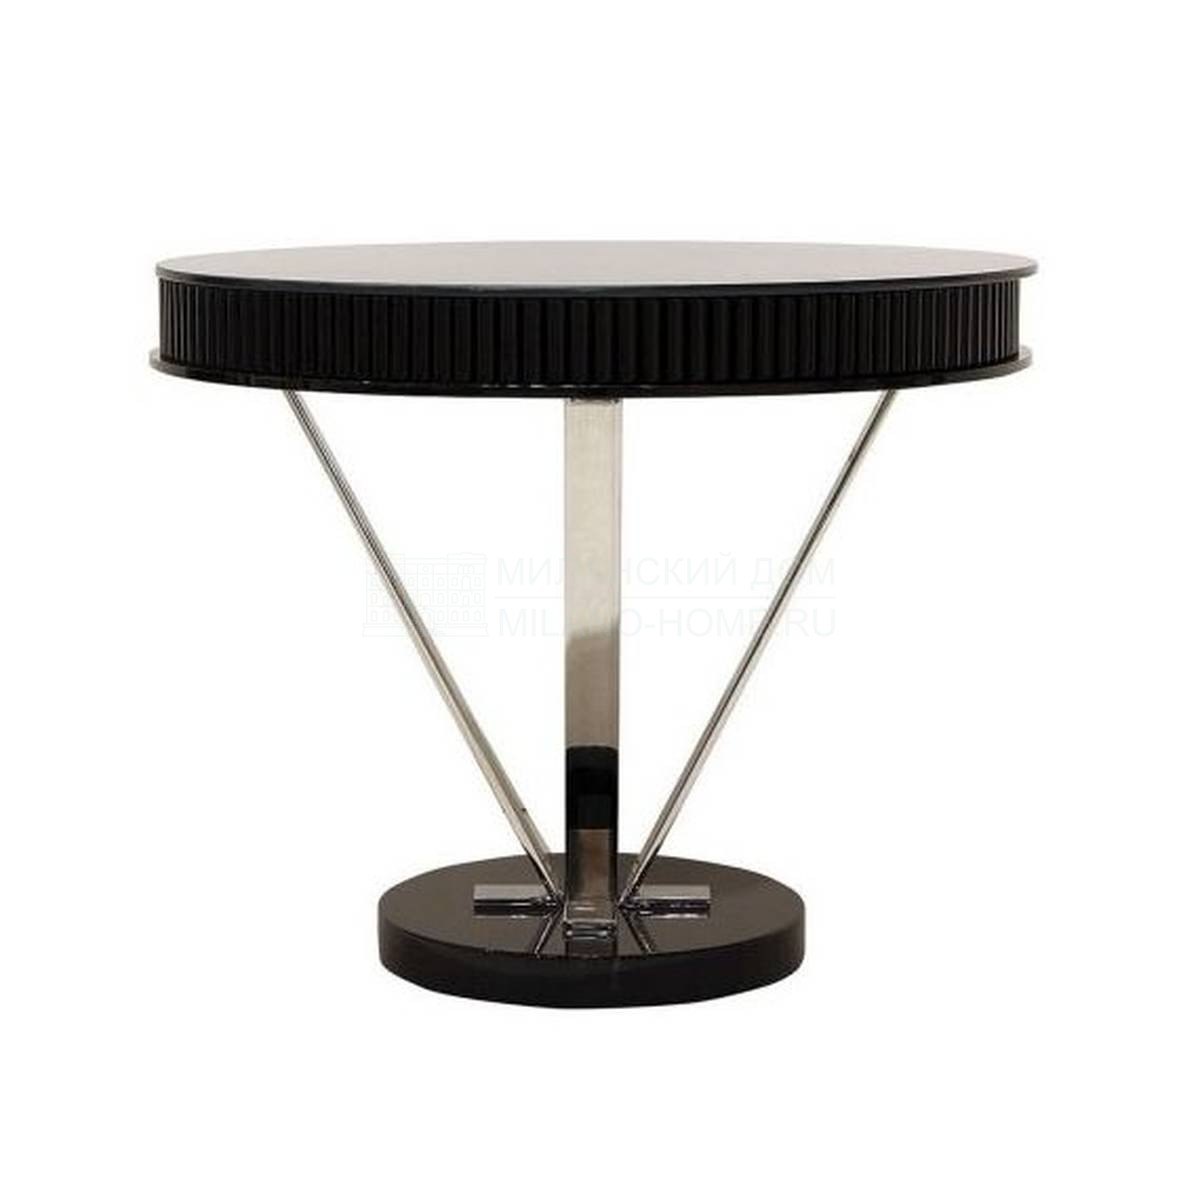 Круглый стол Q-06 round coffee table из Испании фабрики GUADARTE